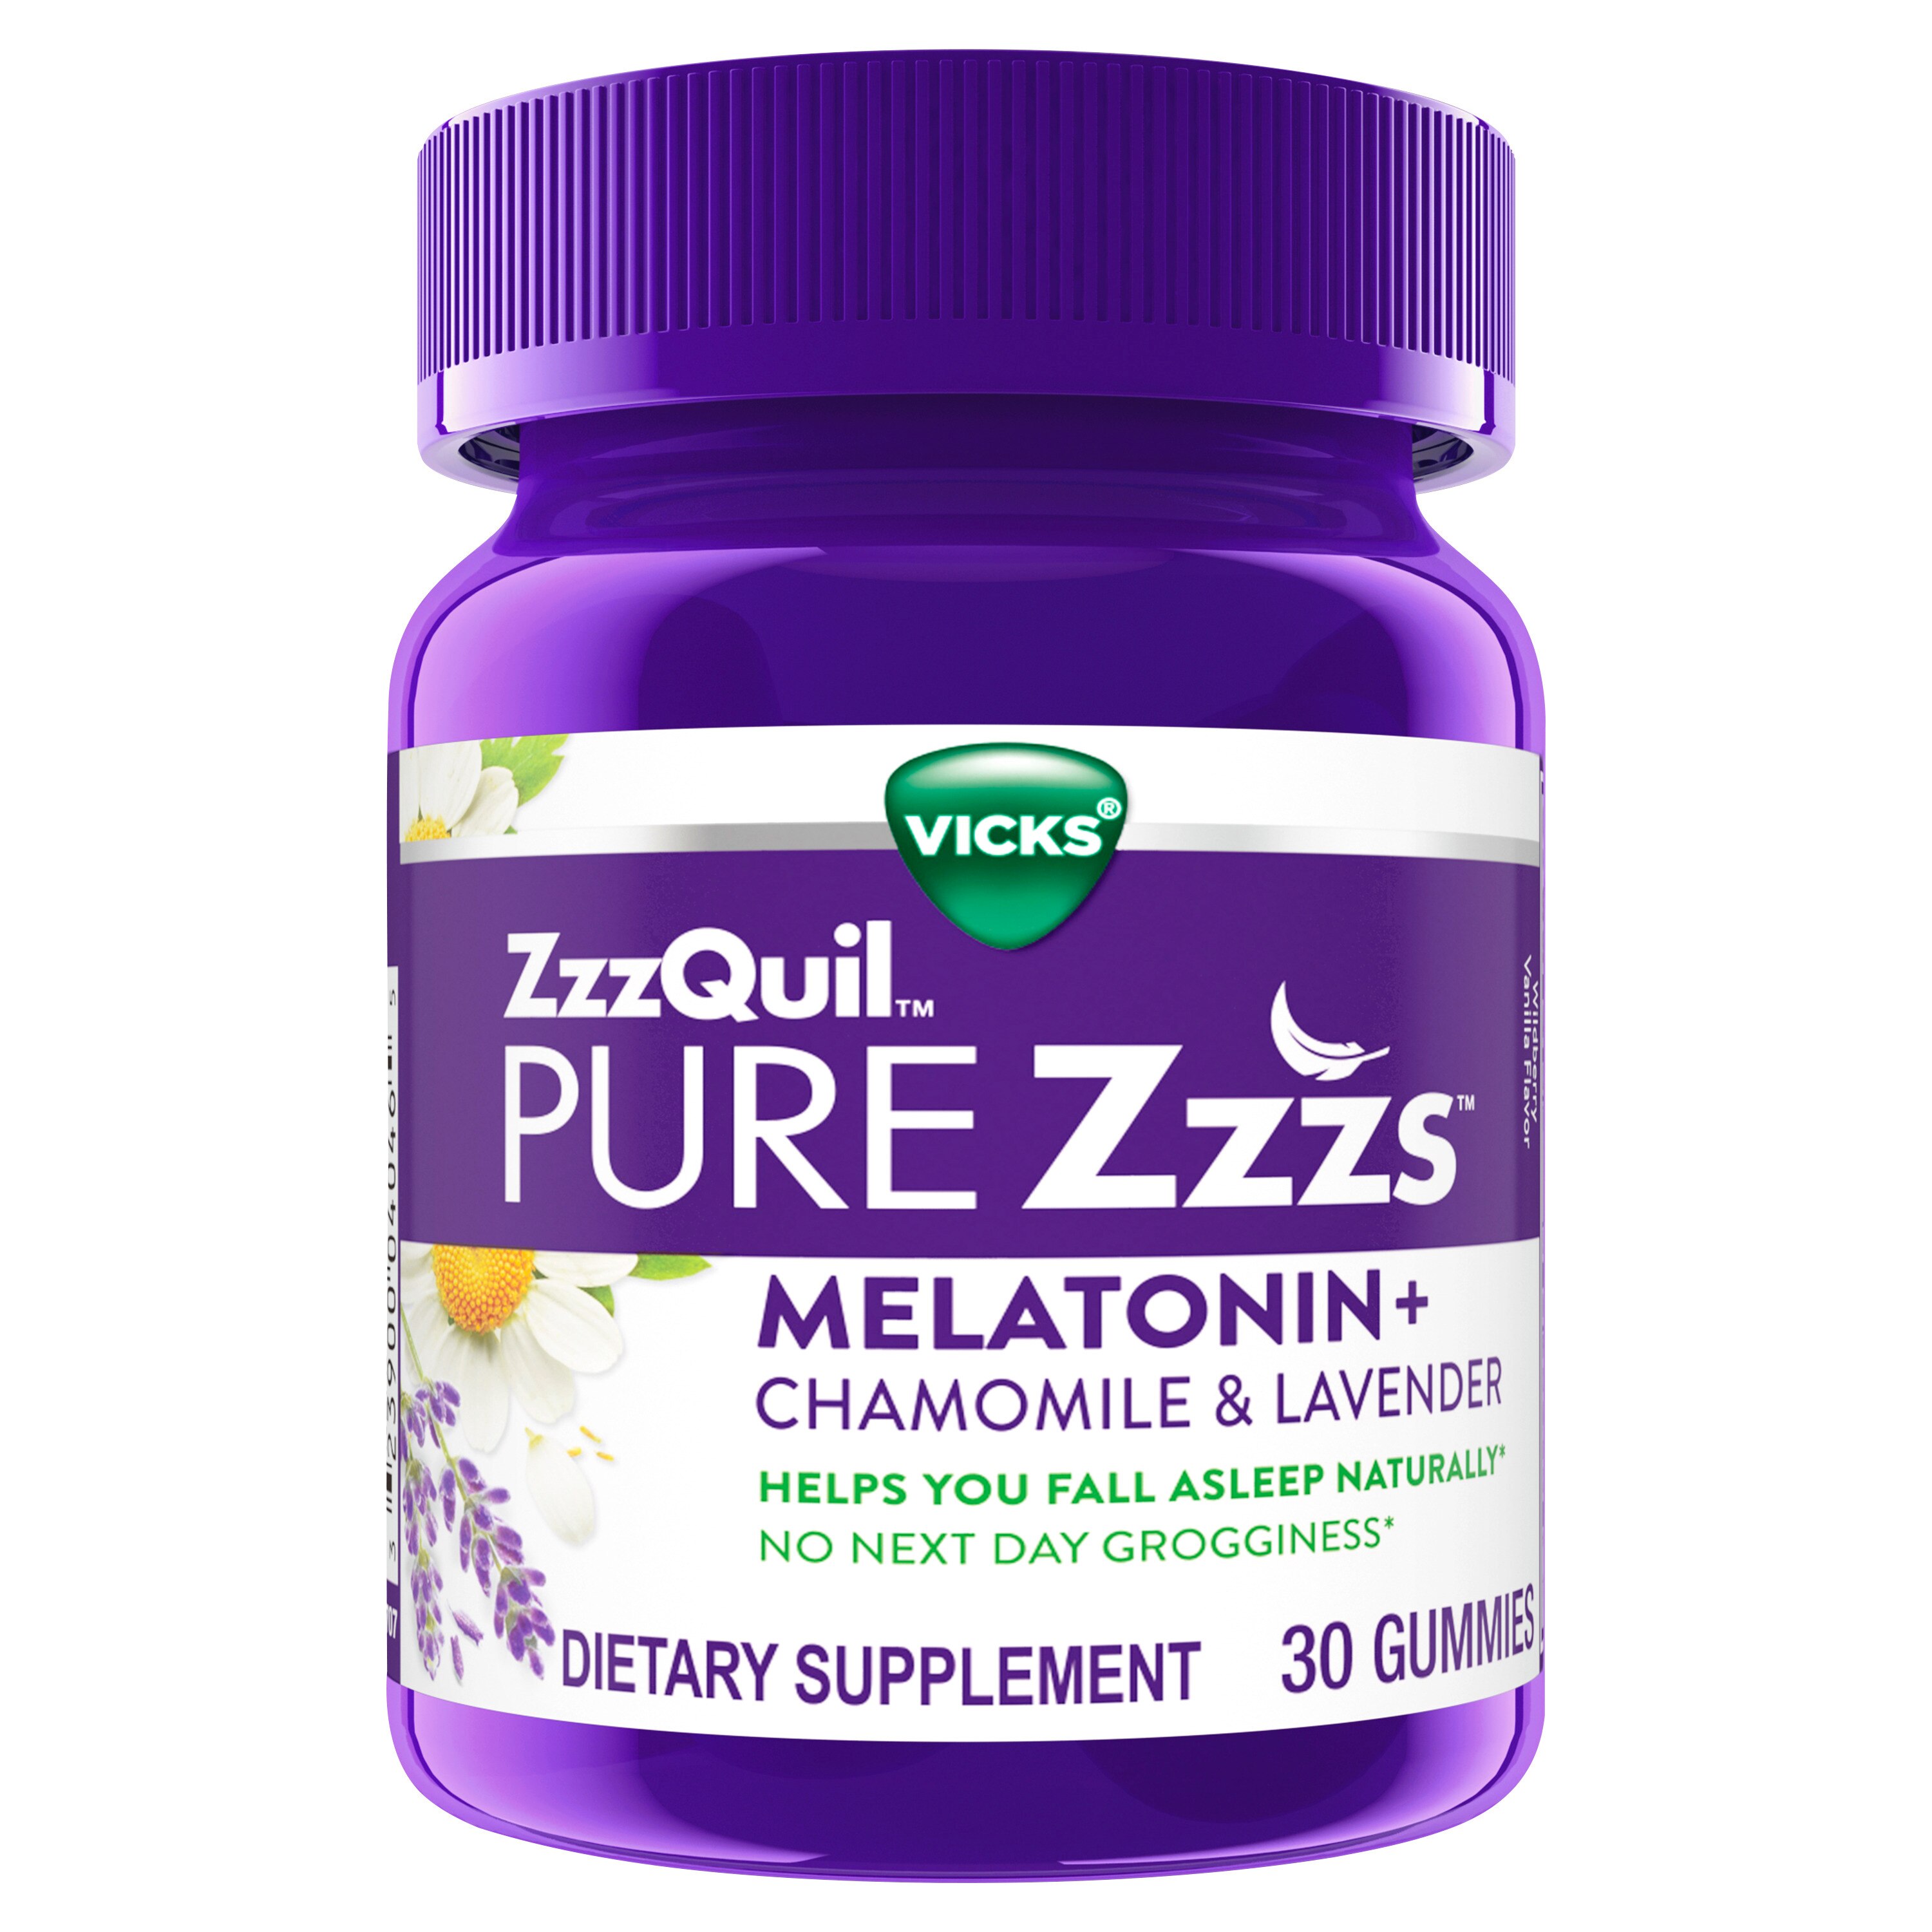 ZzzQuil PURE Zzzs Melatonin Sleep Aid Gummies, Wildberry Vanilla Flavor, Chamomile Lavender & Valerian Root, 1mg per gummy